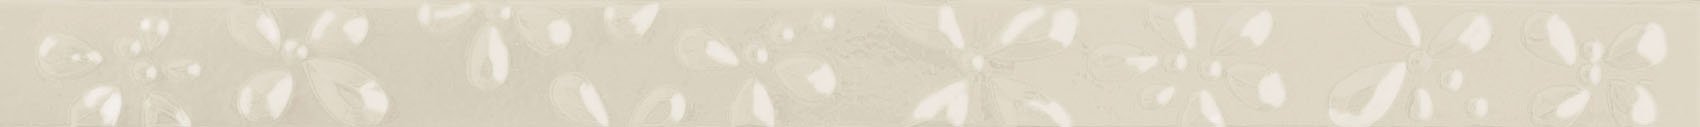 Бордюры Epoca Le Vernis Lotus Listelo Pearl, цвет серый, поверхность глянцевая, прямоугольник, 40x502